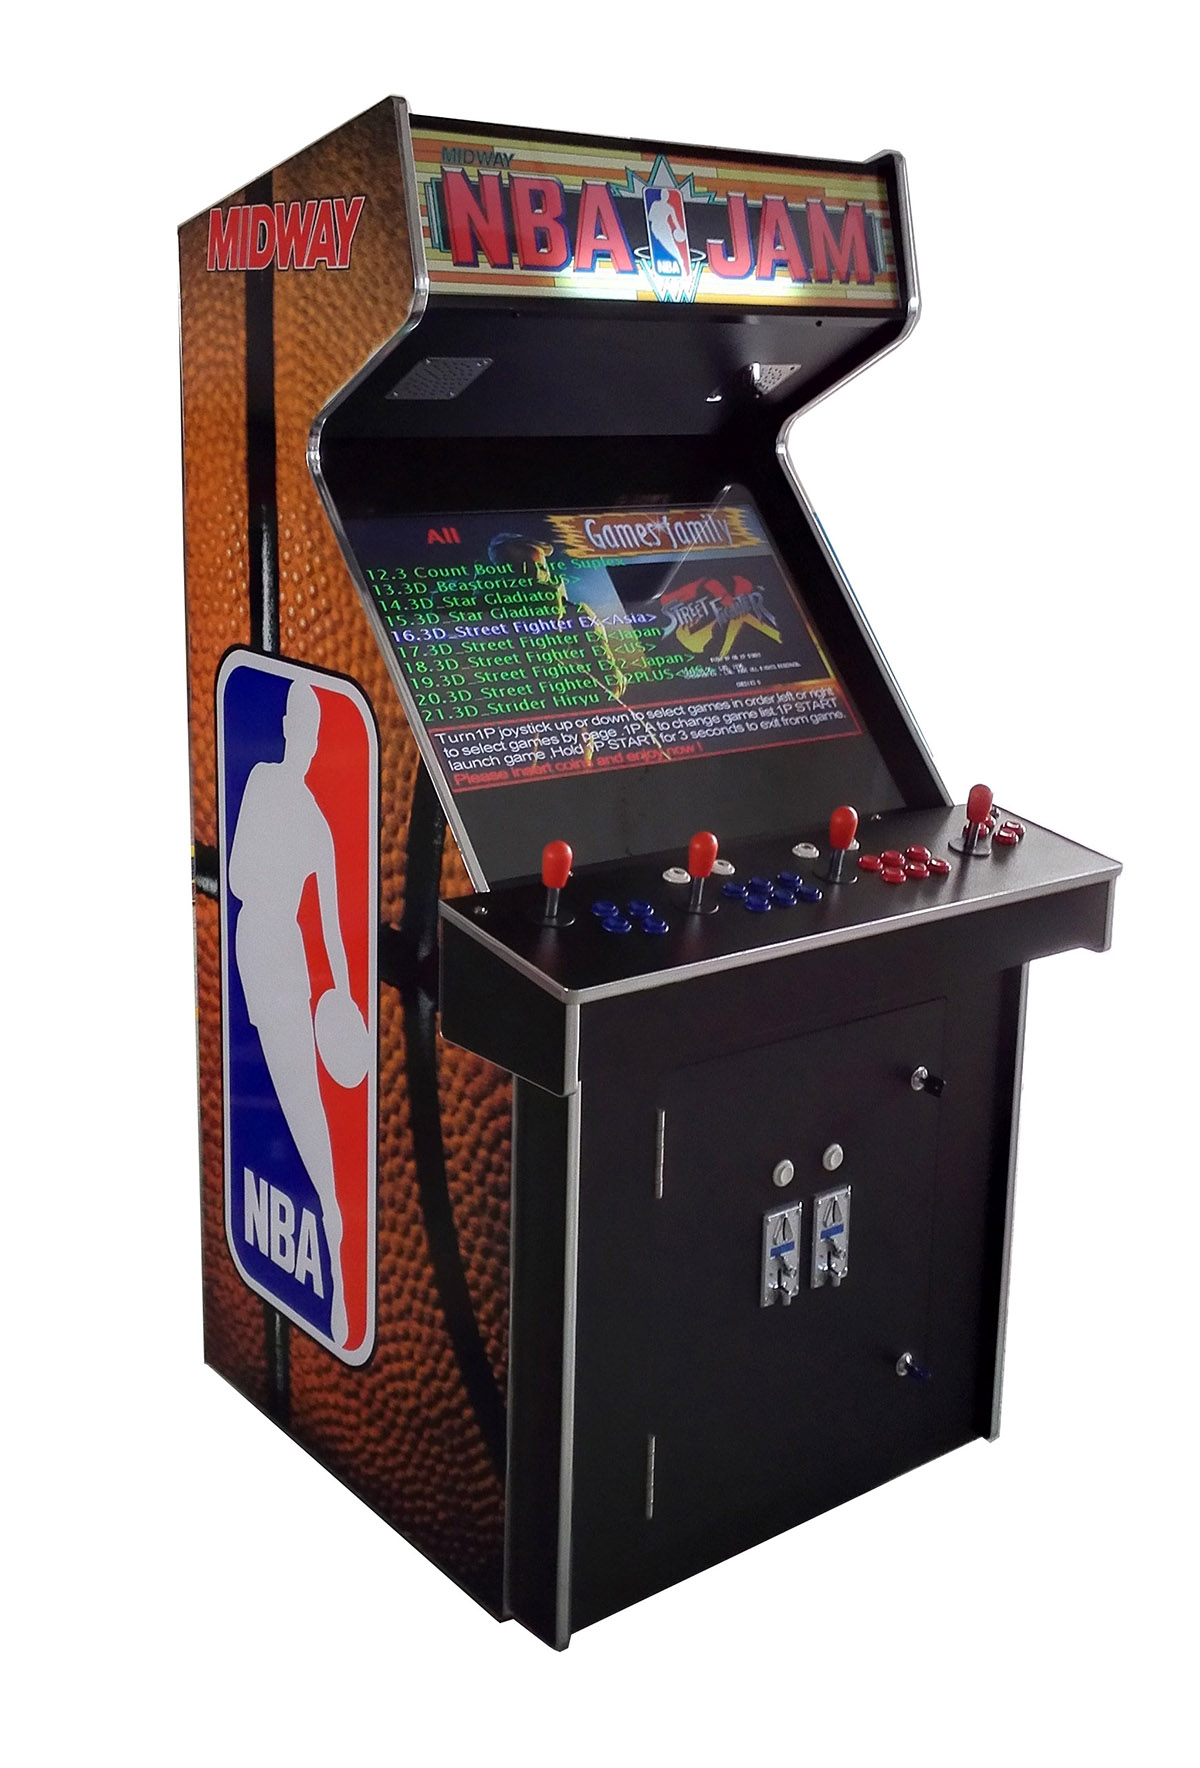 Arcade Rewind 3500 in 1 Upright Arcade Machine with NBA JAM